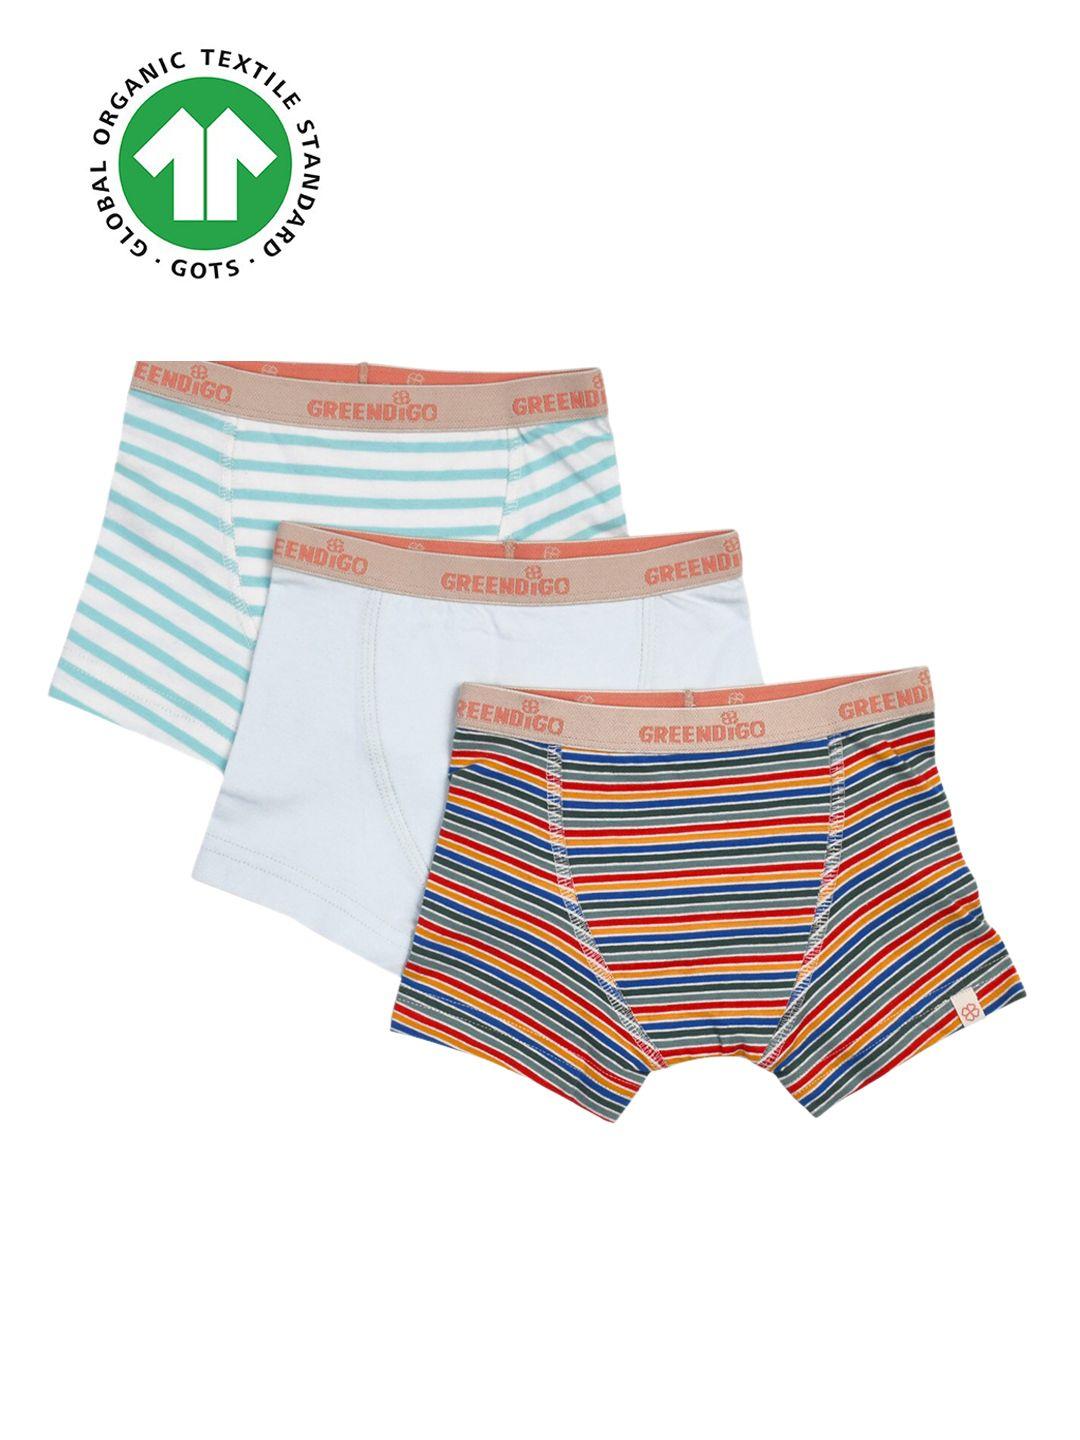 greendigo-boys-pack-of-3-organic-cotton-boy-shorts-briefs